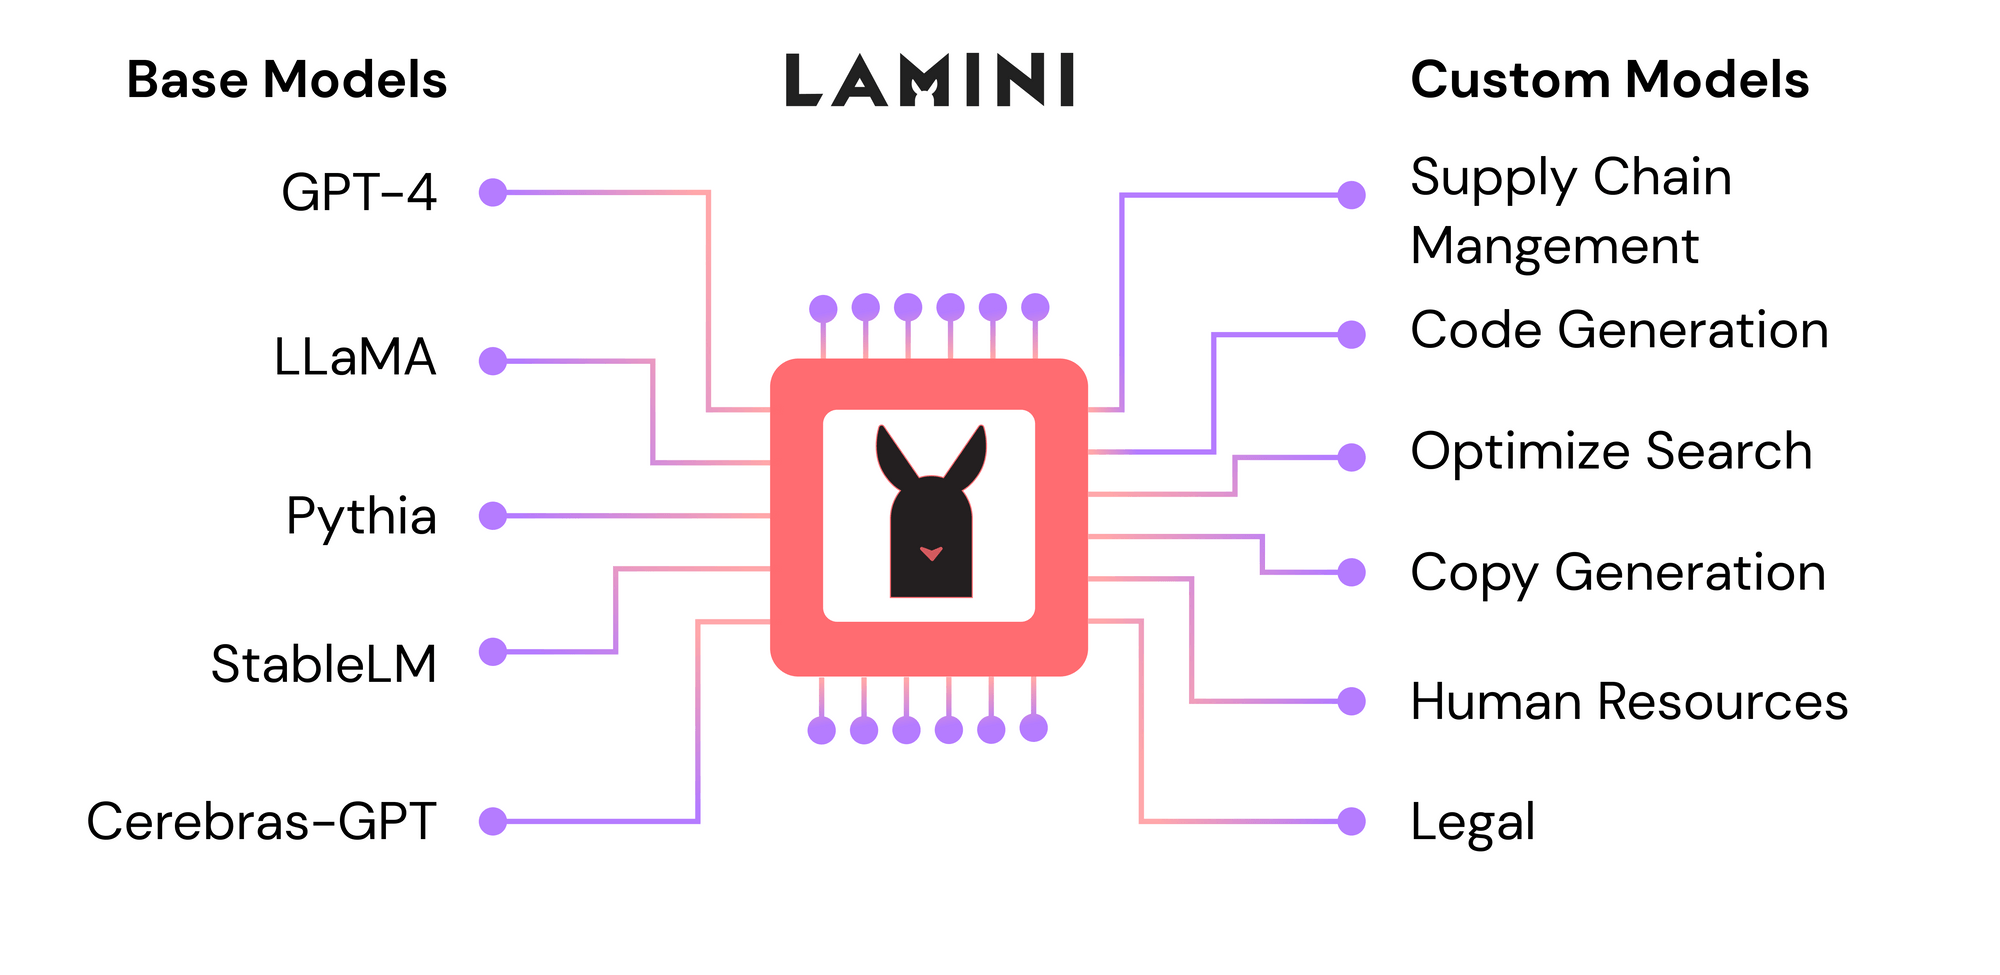 Lamini Process Step by Step